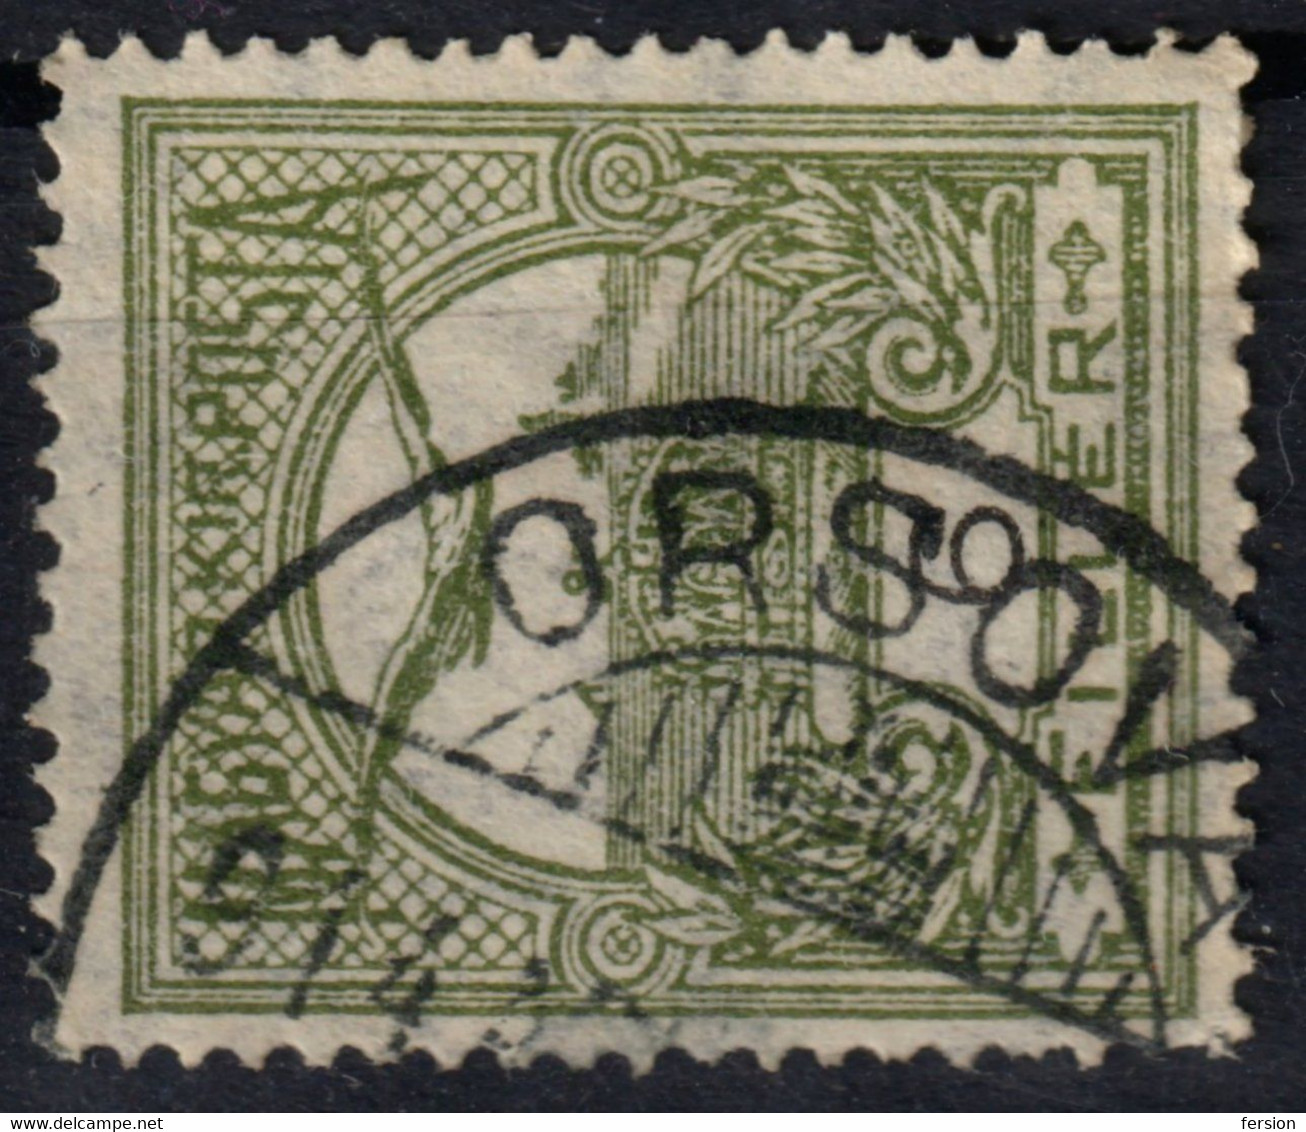 ORSOVA Orșova Postmark / TURUL Crown 1914 Hungary Romania Transylvania  Krassó Szörény County KuK - 6 Fill - Transsylvanië